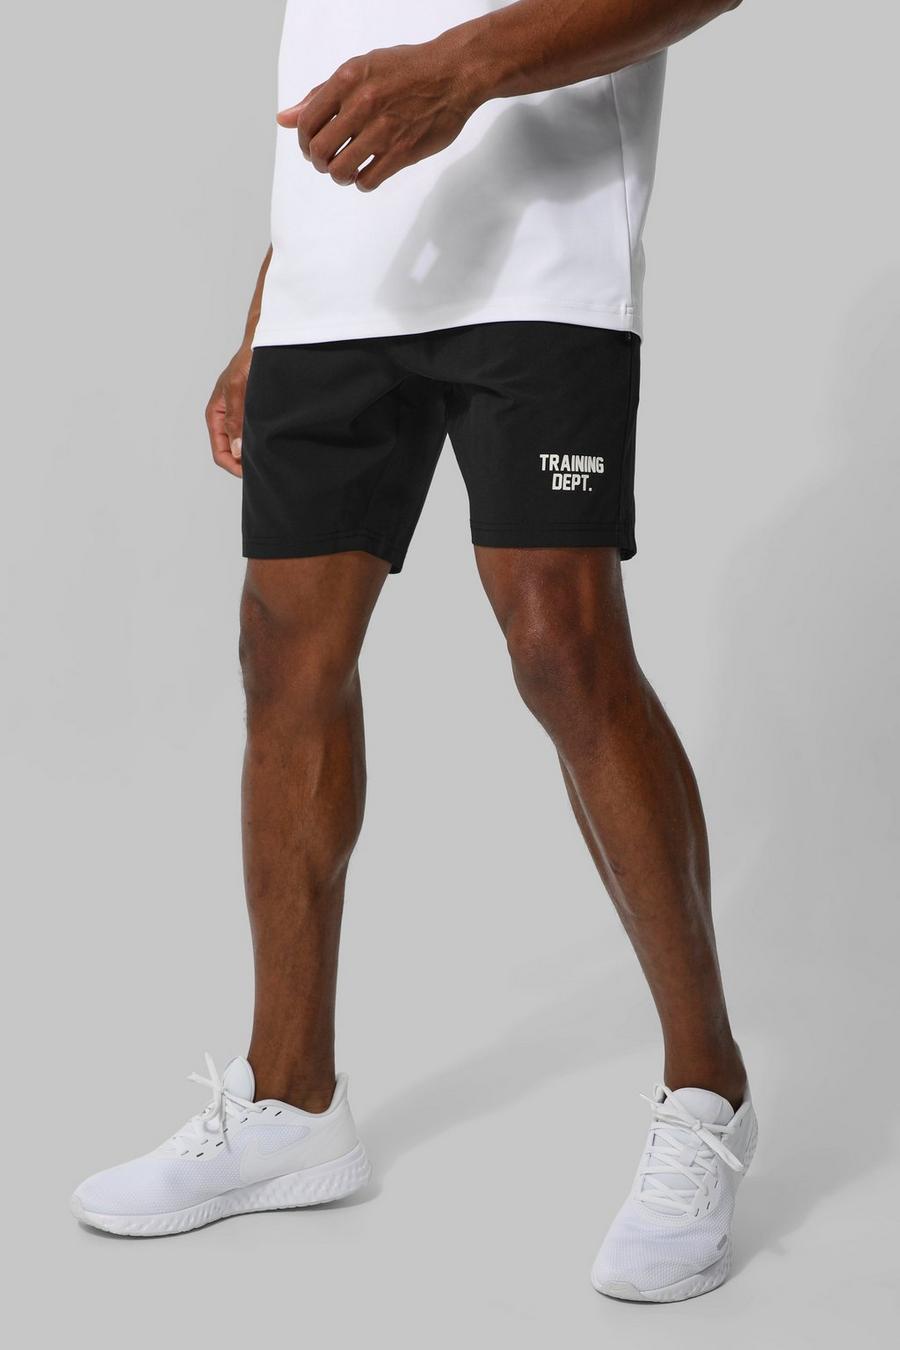 Black nero Man Active Performance Training Dept Shorts